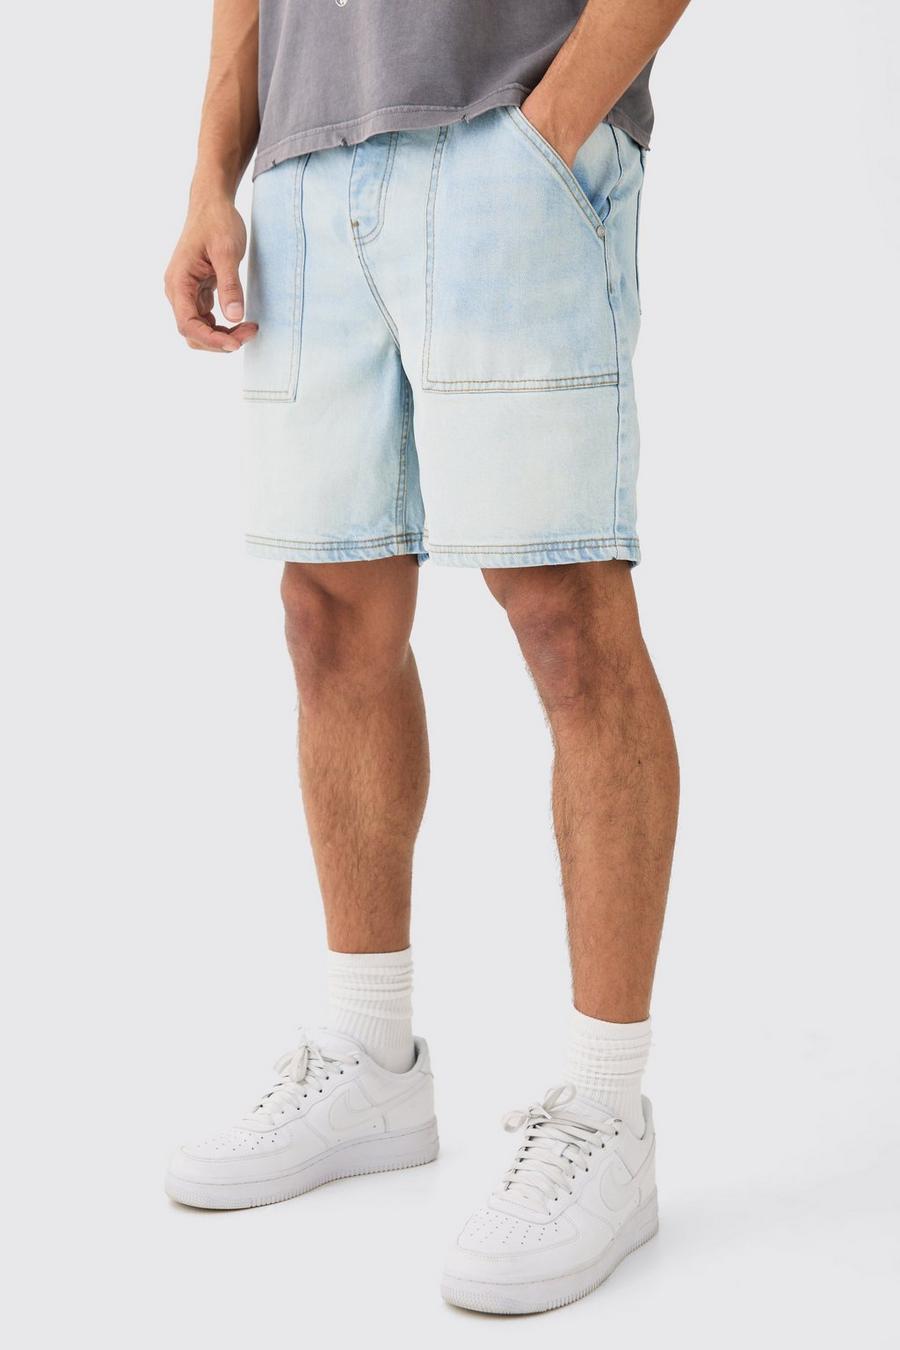 Pantalón corto vaquero holgado sin tratar MAN con bolsillo trasero en relieve, Light blue image number 1